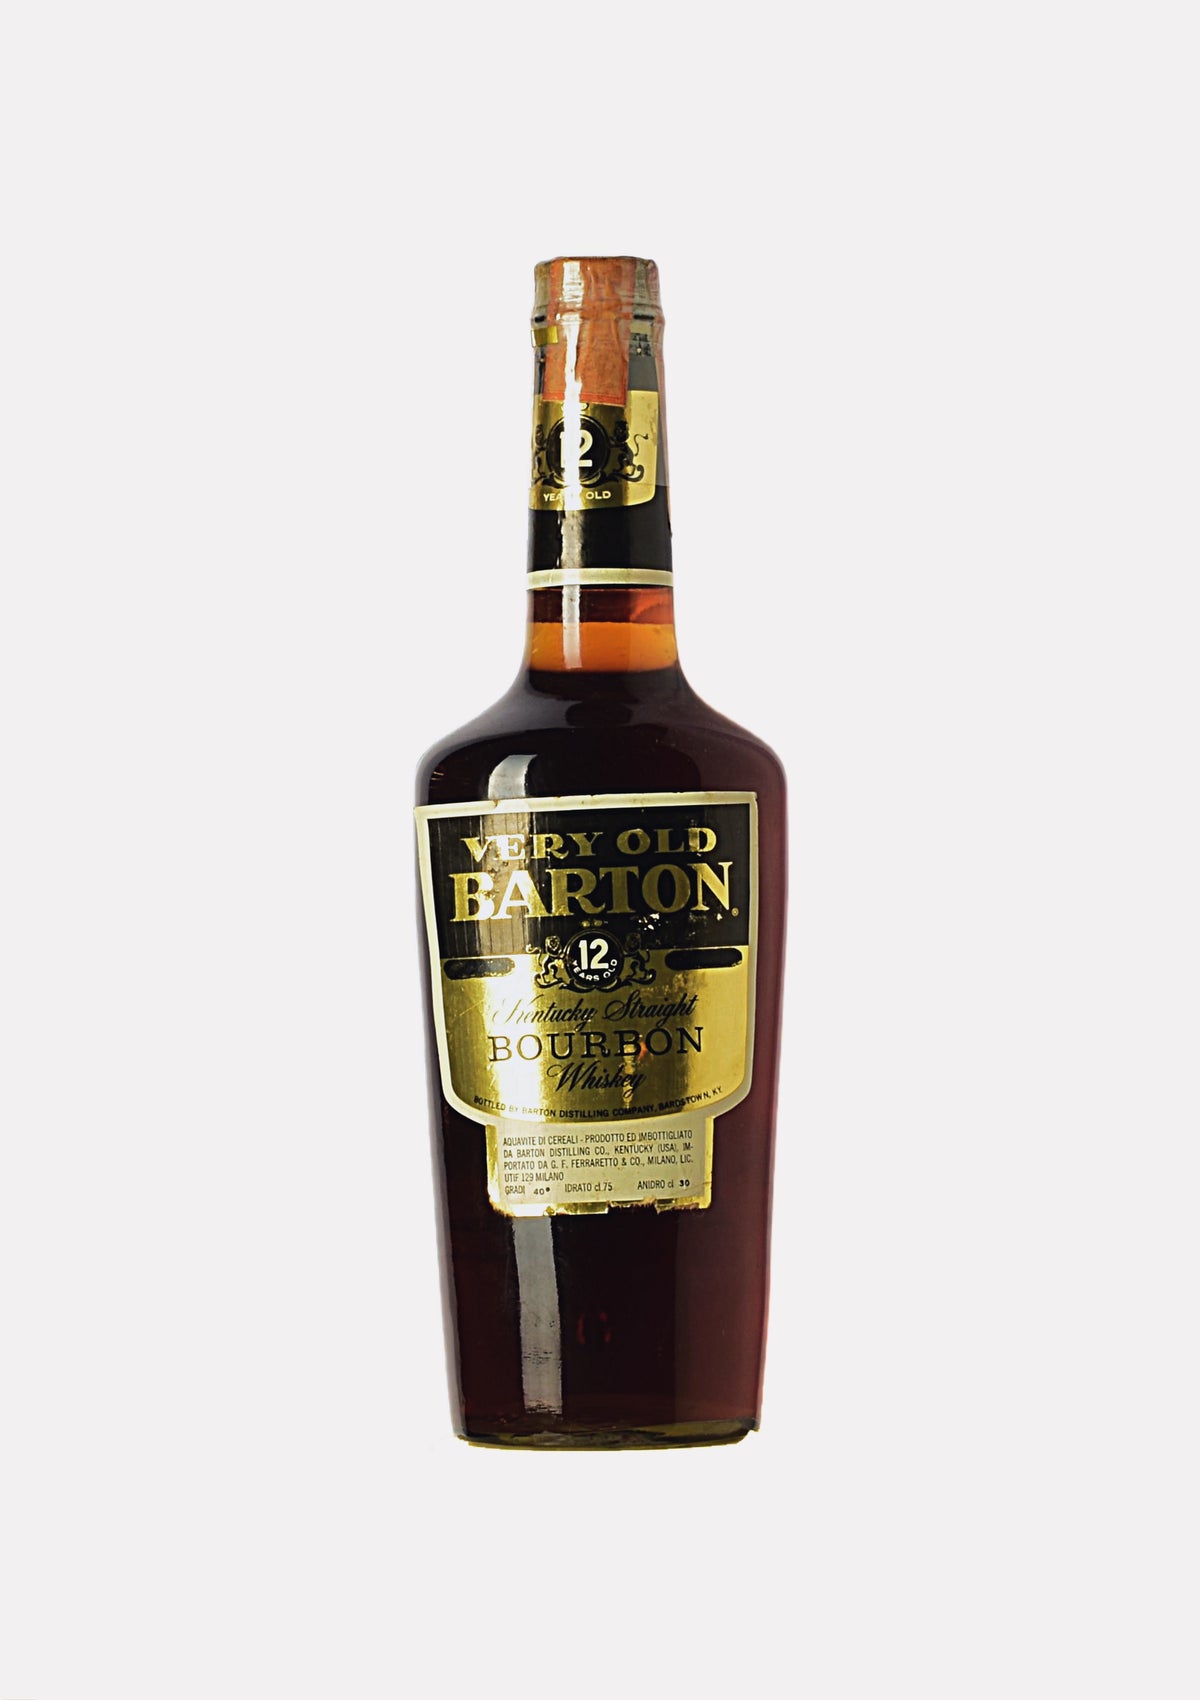 Very Old Barton Kentucky Straight Bourbon Whiskey 12 Jahre